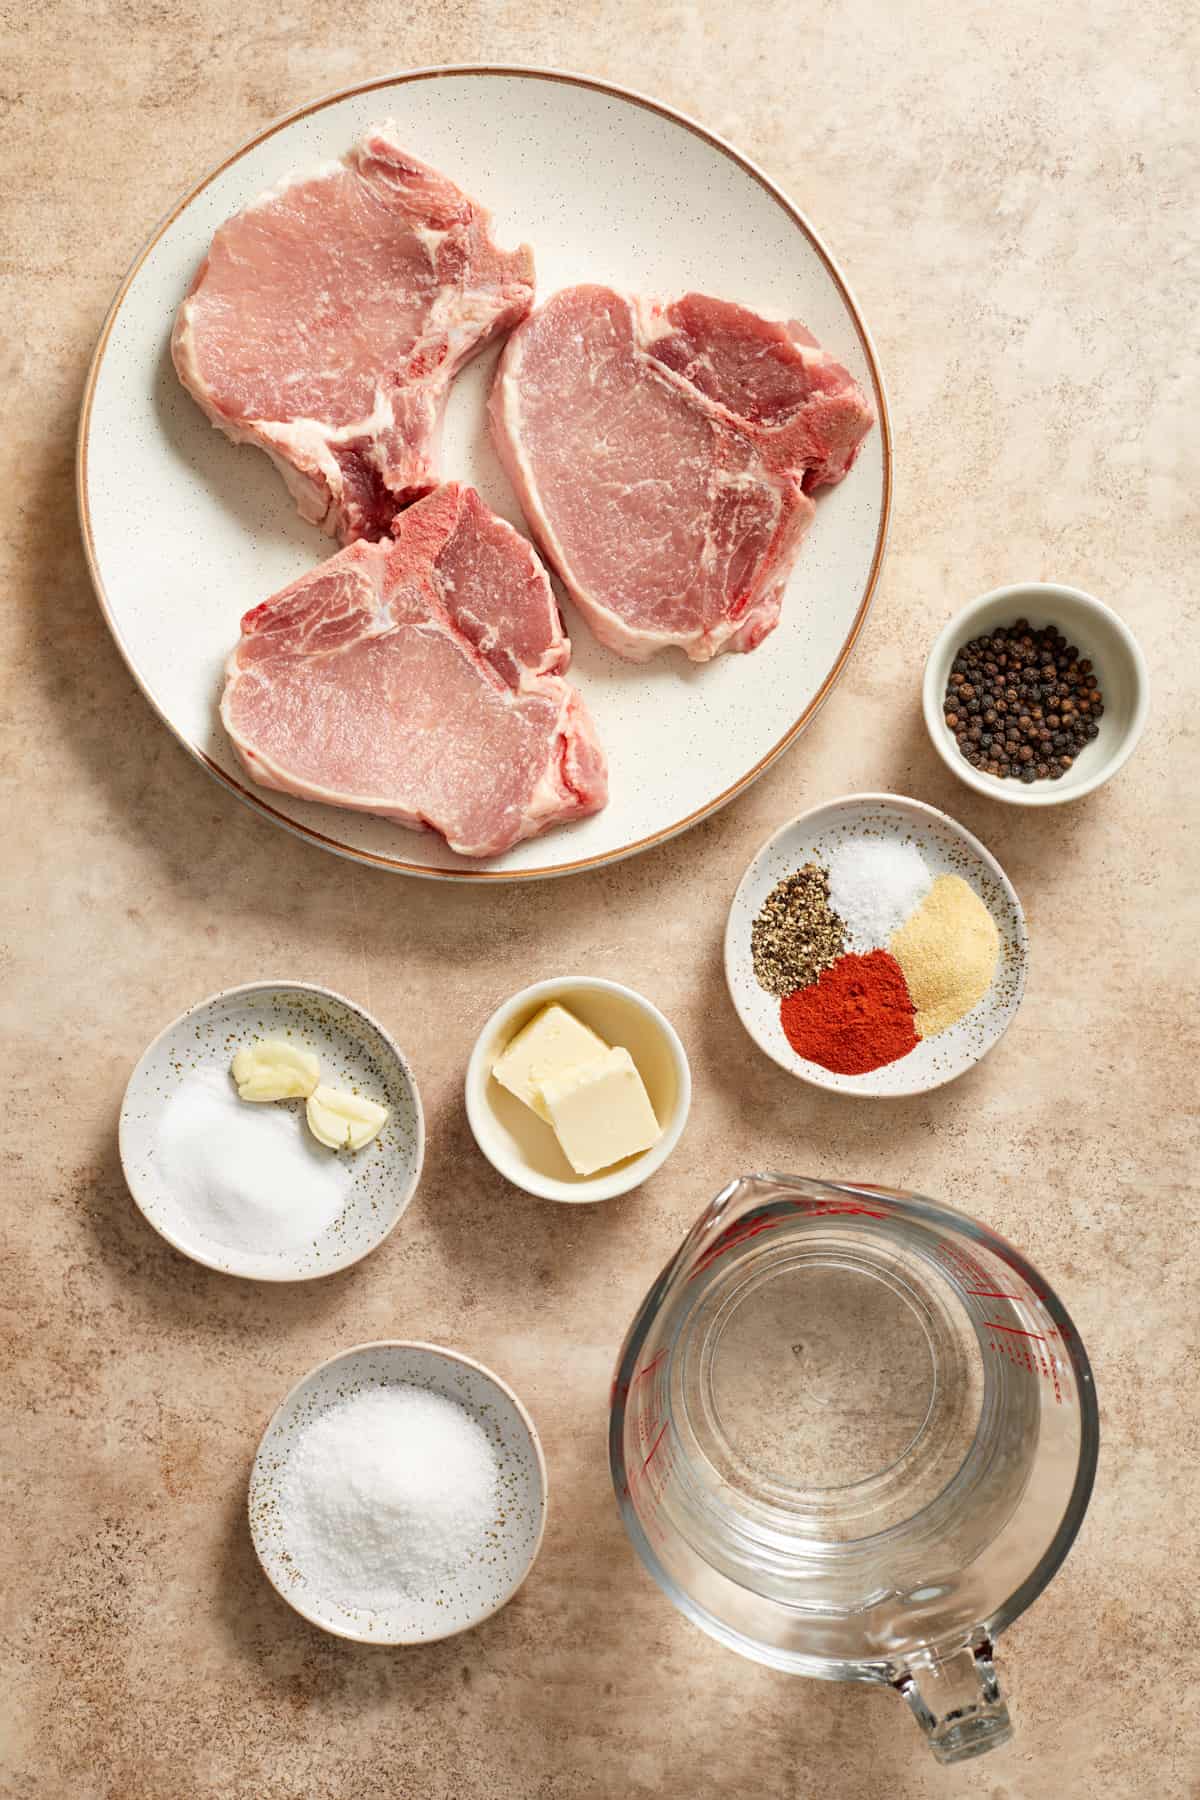 Pork chops, seasoning, water, butter and other ingredients to make cream of mushroom pork chops.